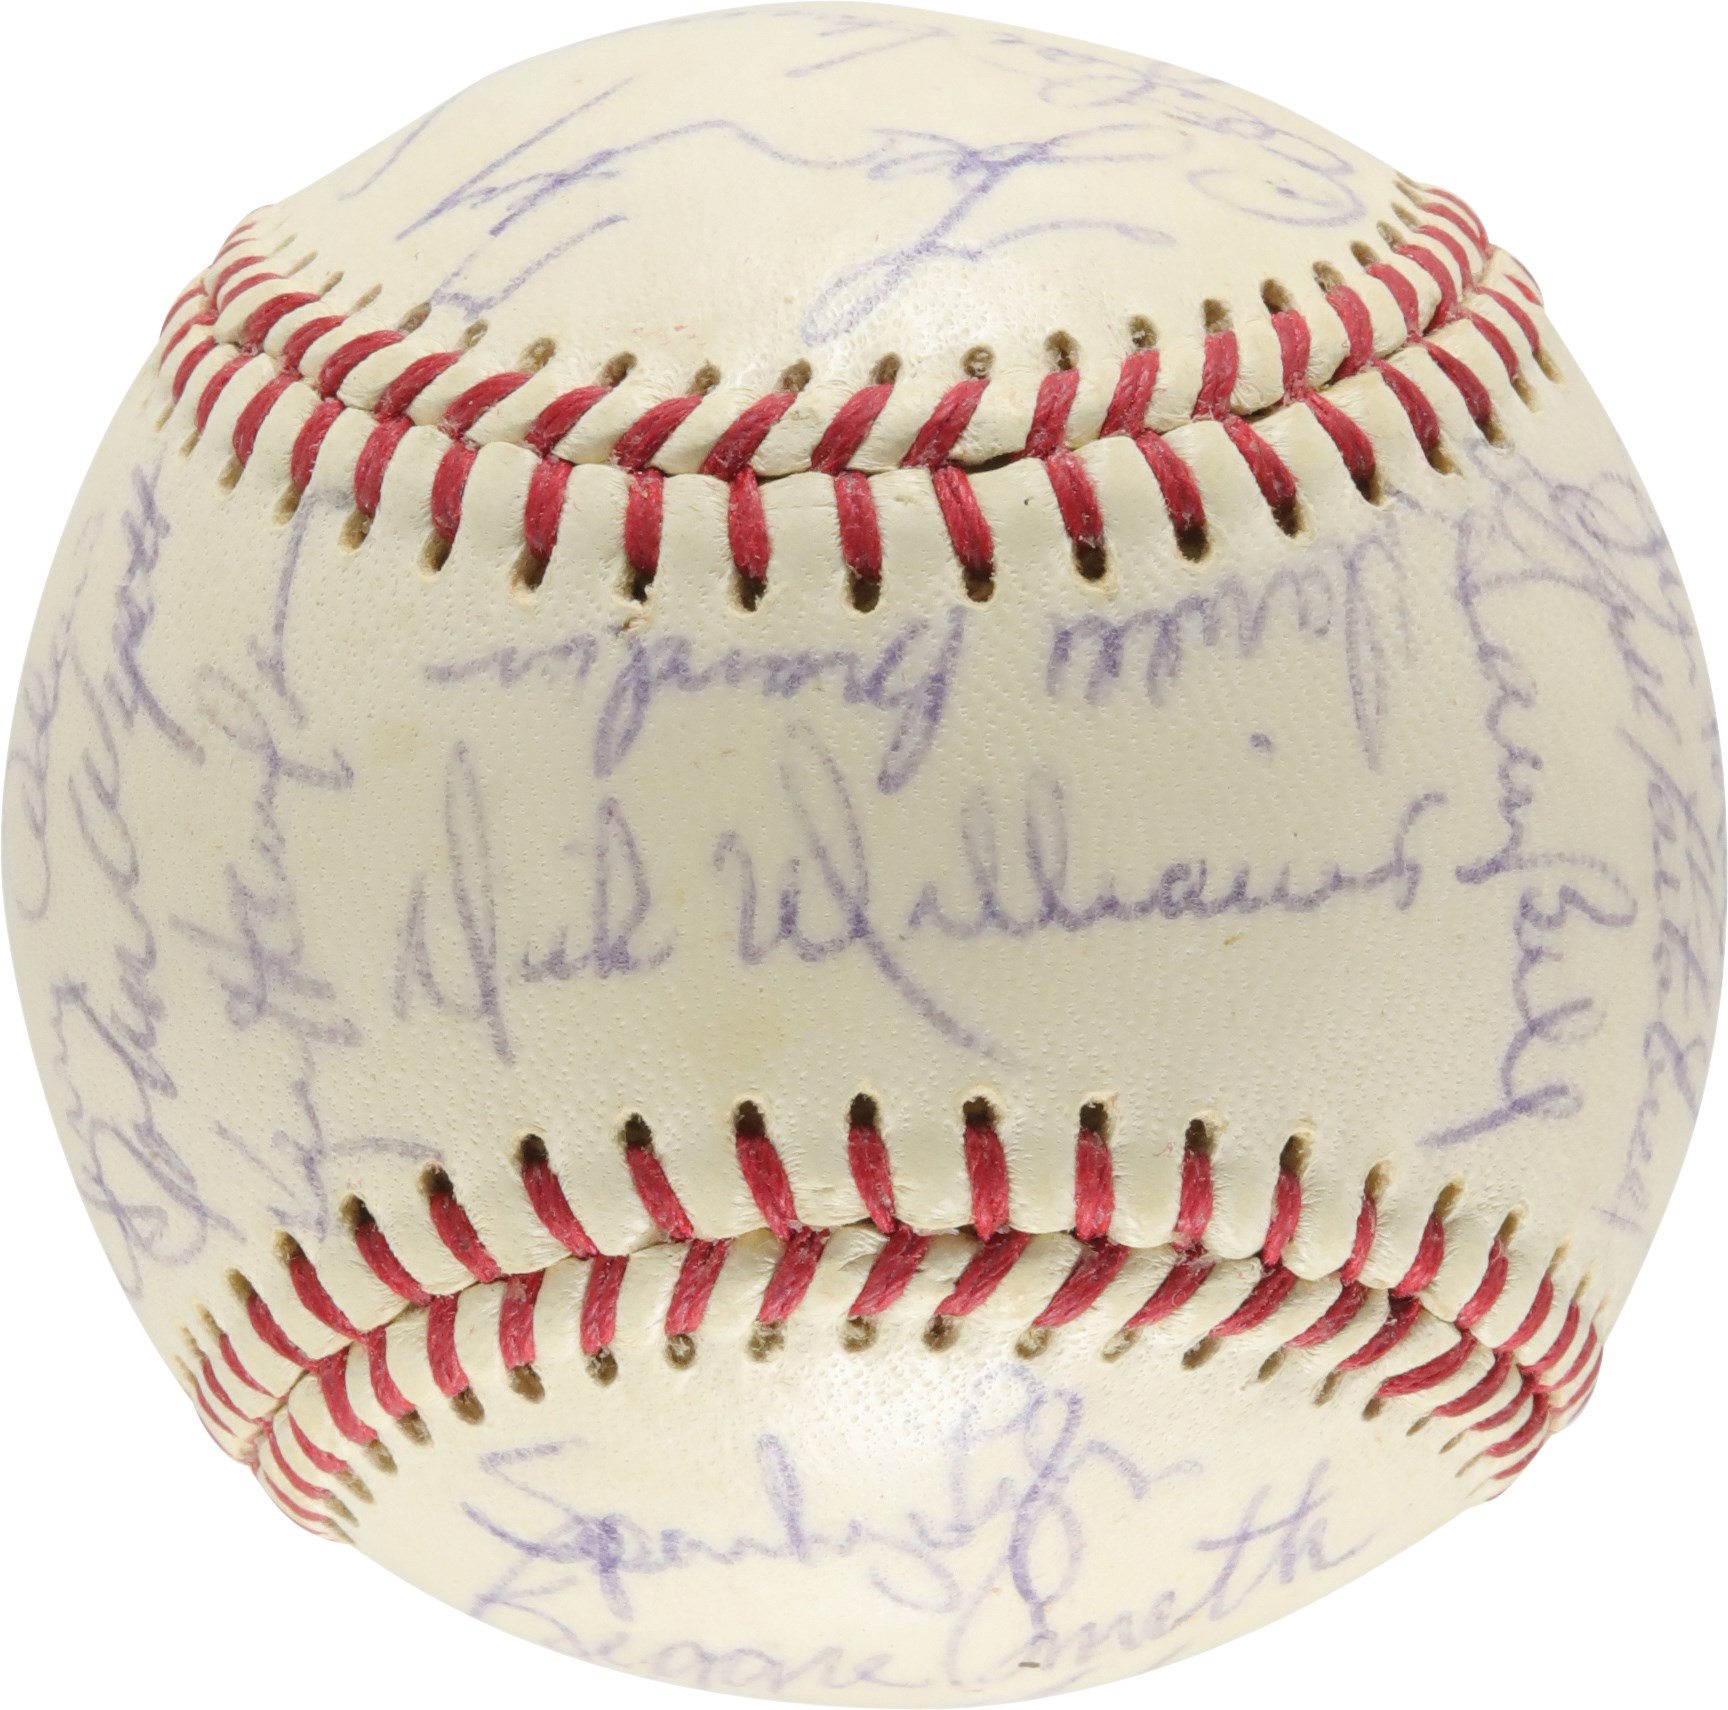 1967 American League Champion Boston Red Sox Team-Signed Baseball